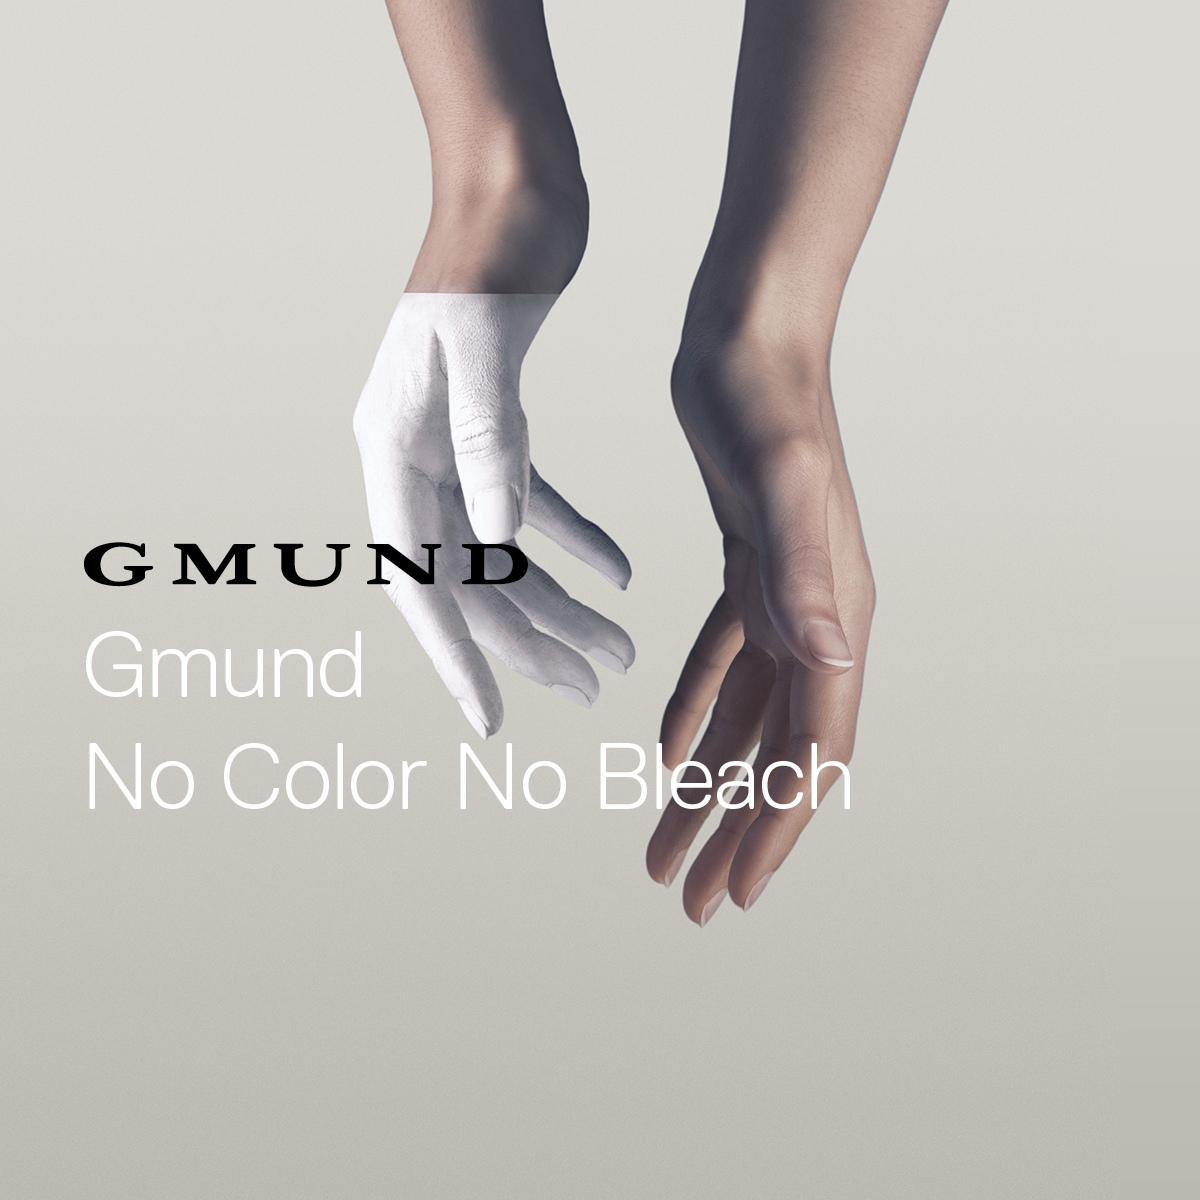 Gmund No Color No Bleach - Compendium Gmund No Color No Bleach